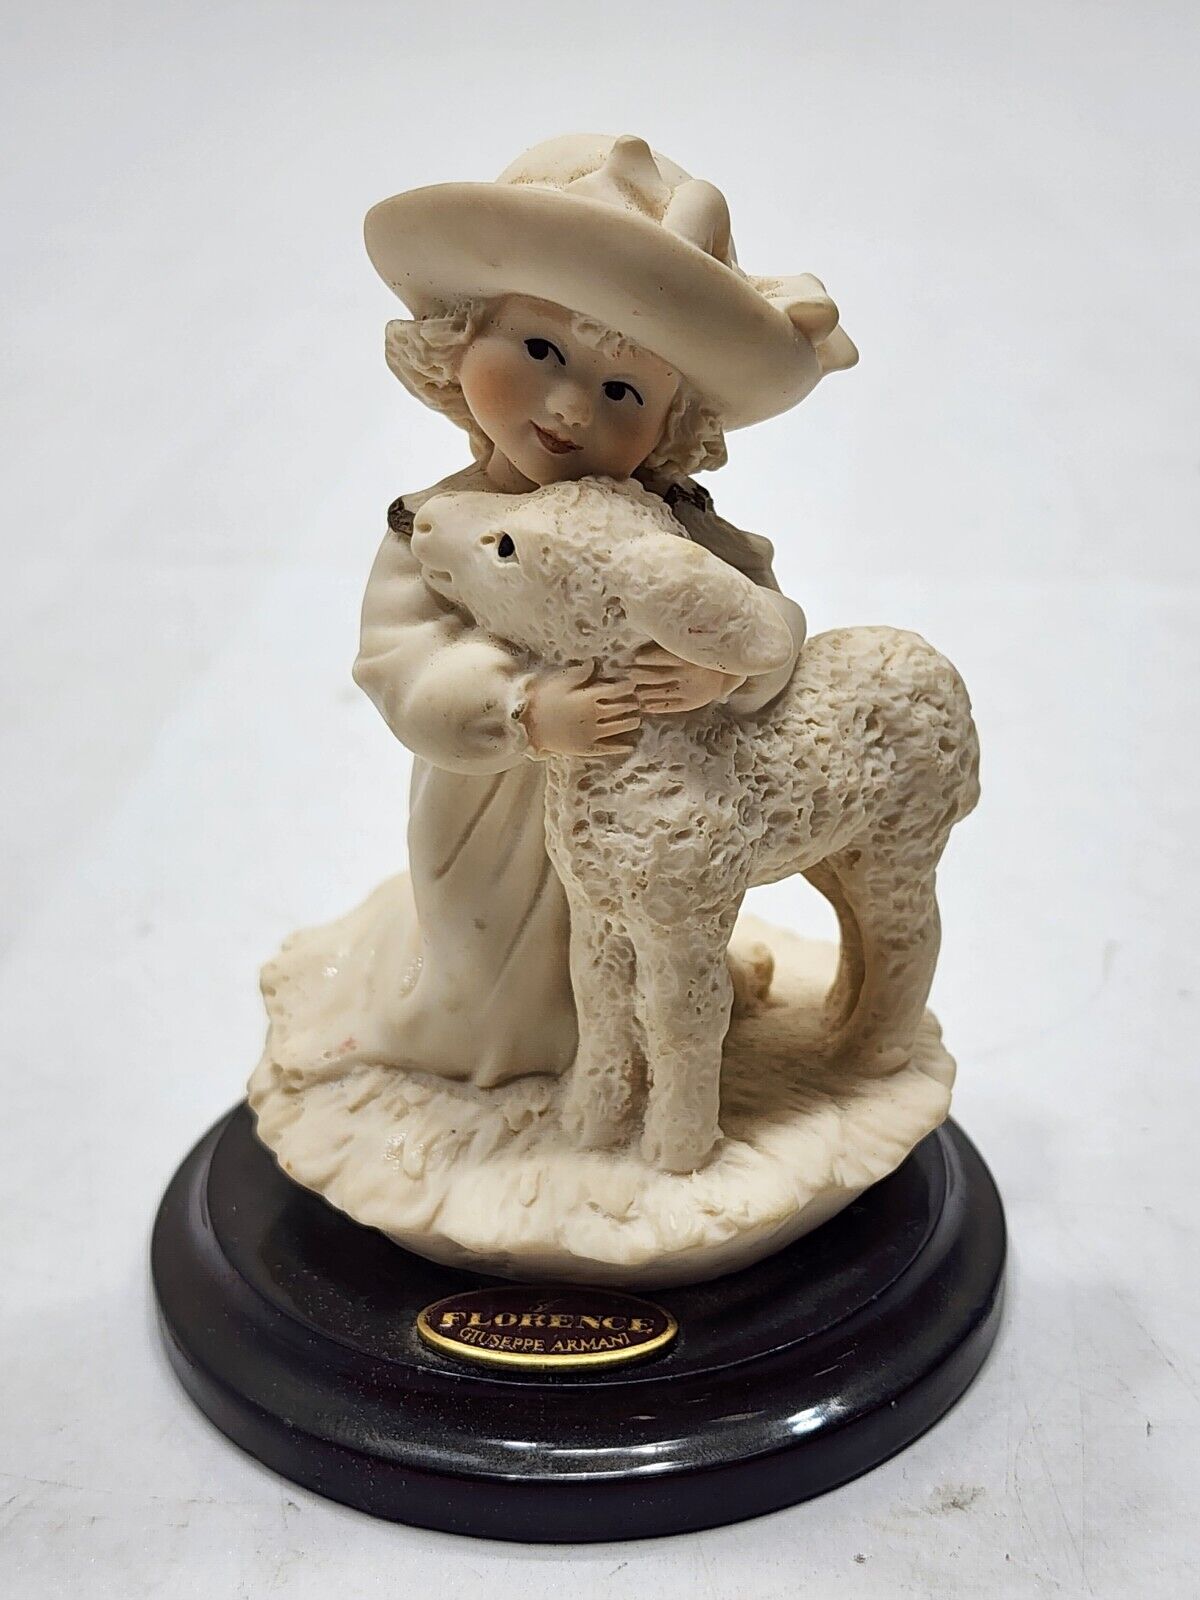 Florence Sculpture D’Arte Guiseppe Armani 1492F Little Lamb “N” Signed